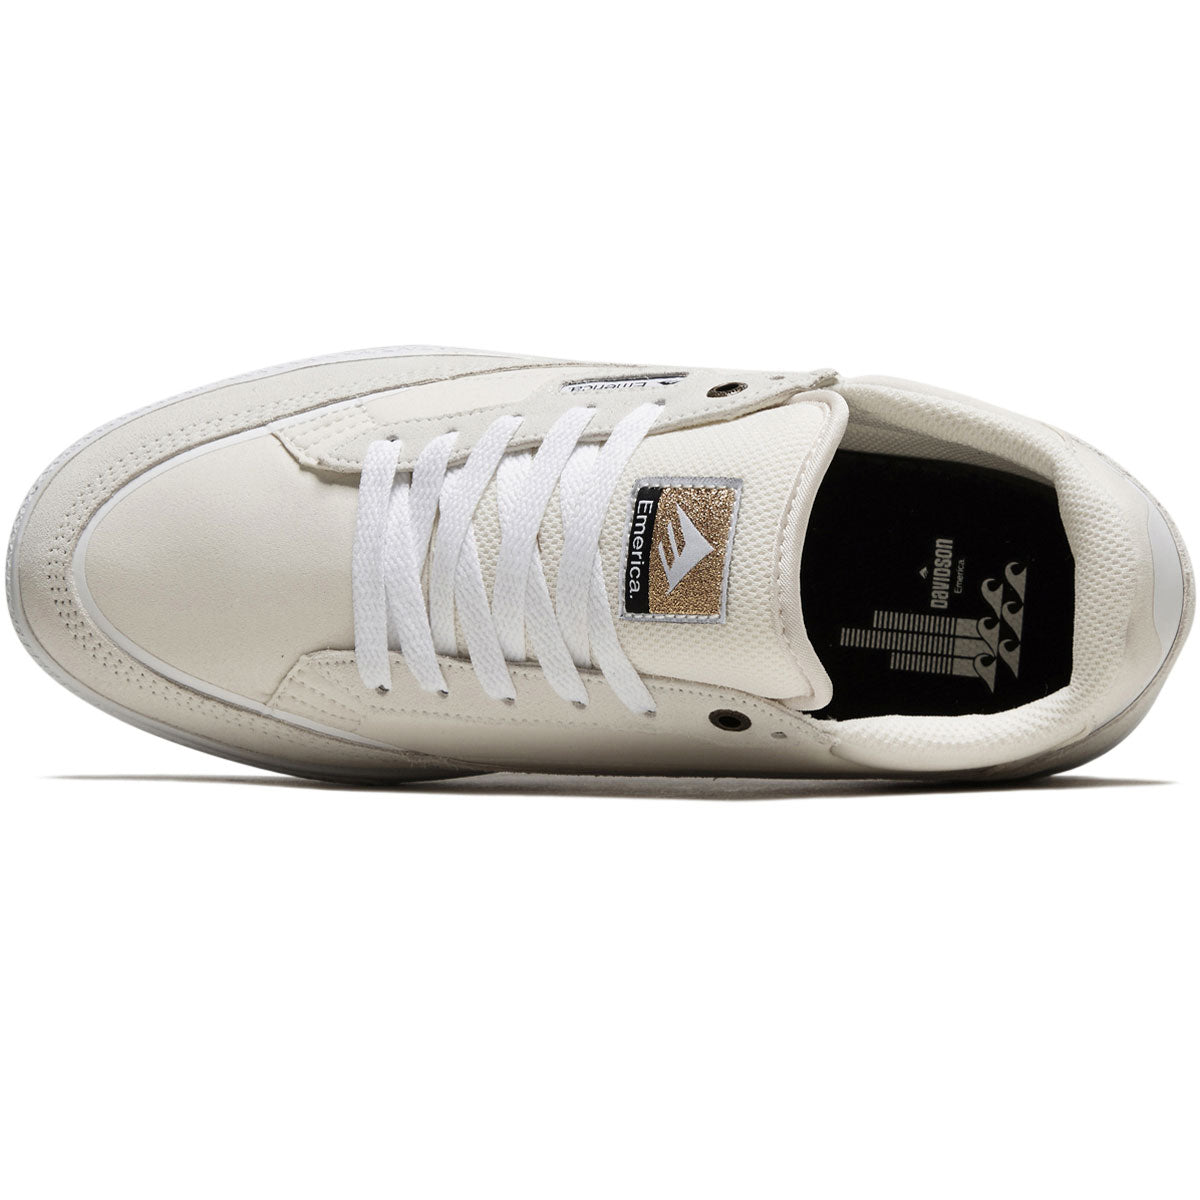 Emerica Gamma G6 Shoes - White image 3